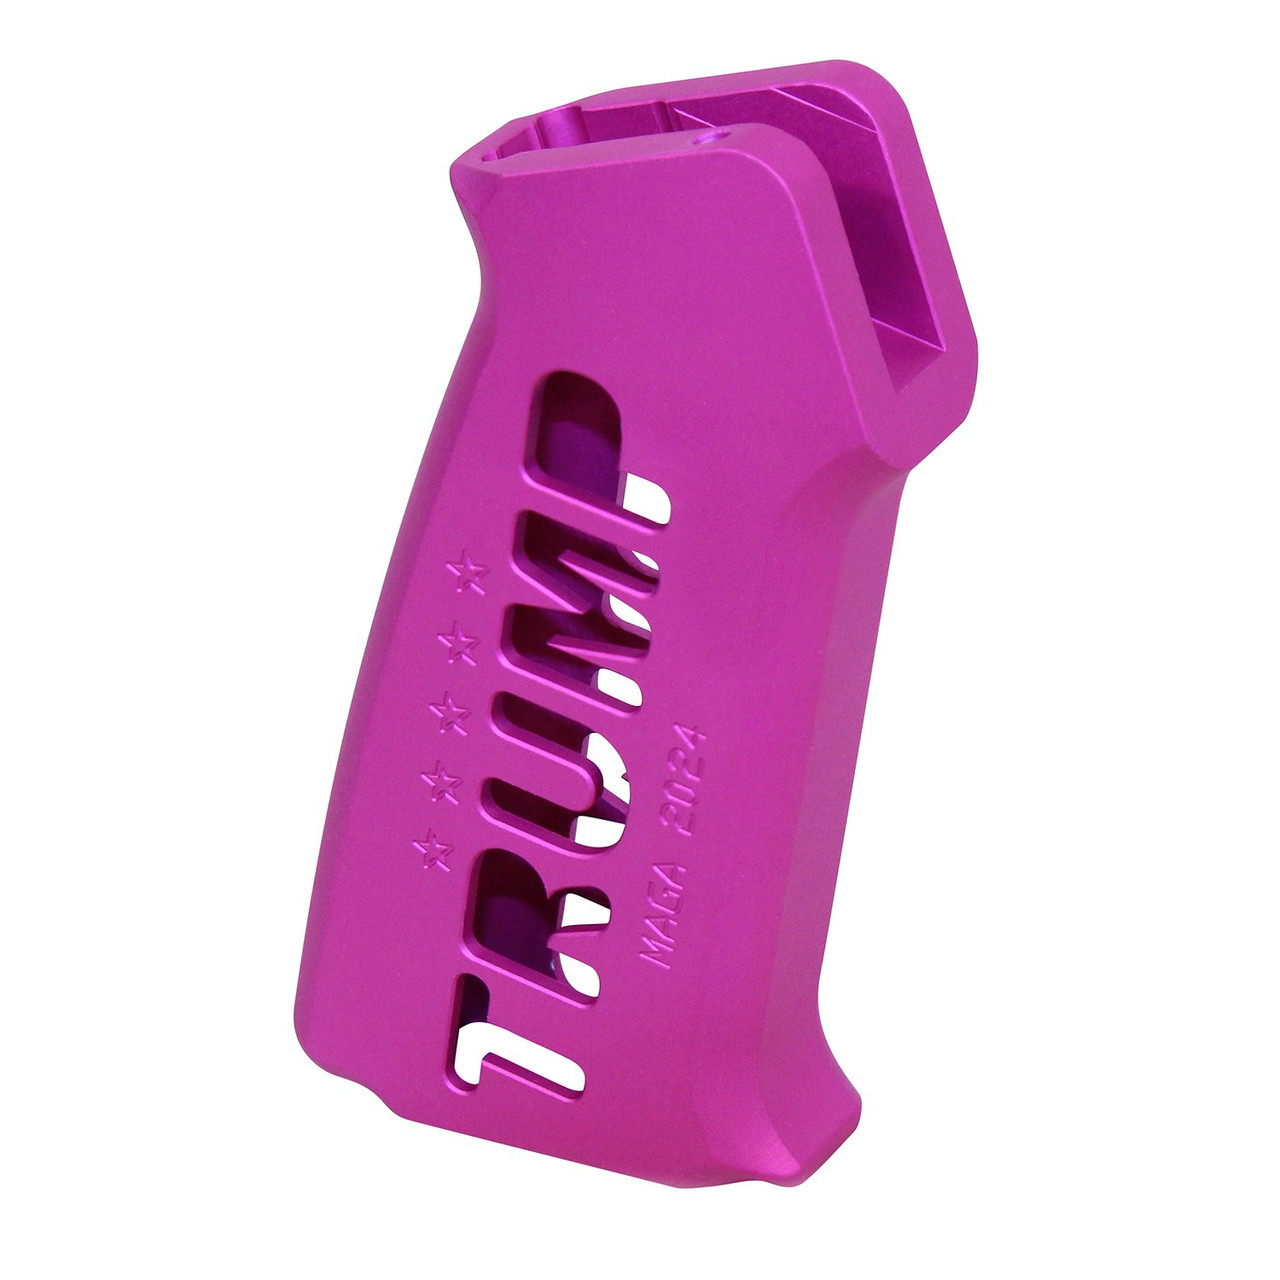 Guntec USA TRUMP-PG-G2-PINK AR-15 "Trump Series" Limited Edition Pistol Grip (Anodized Pink)